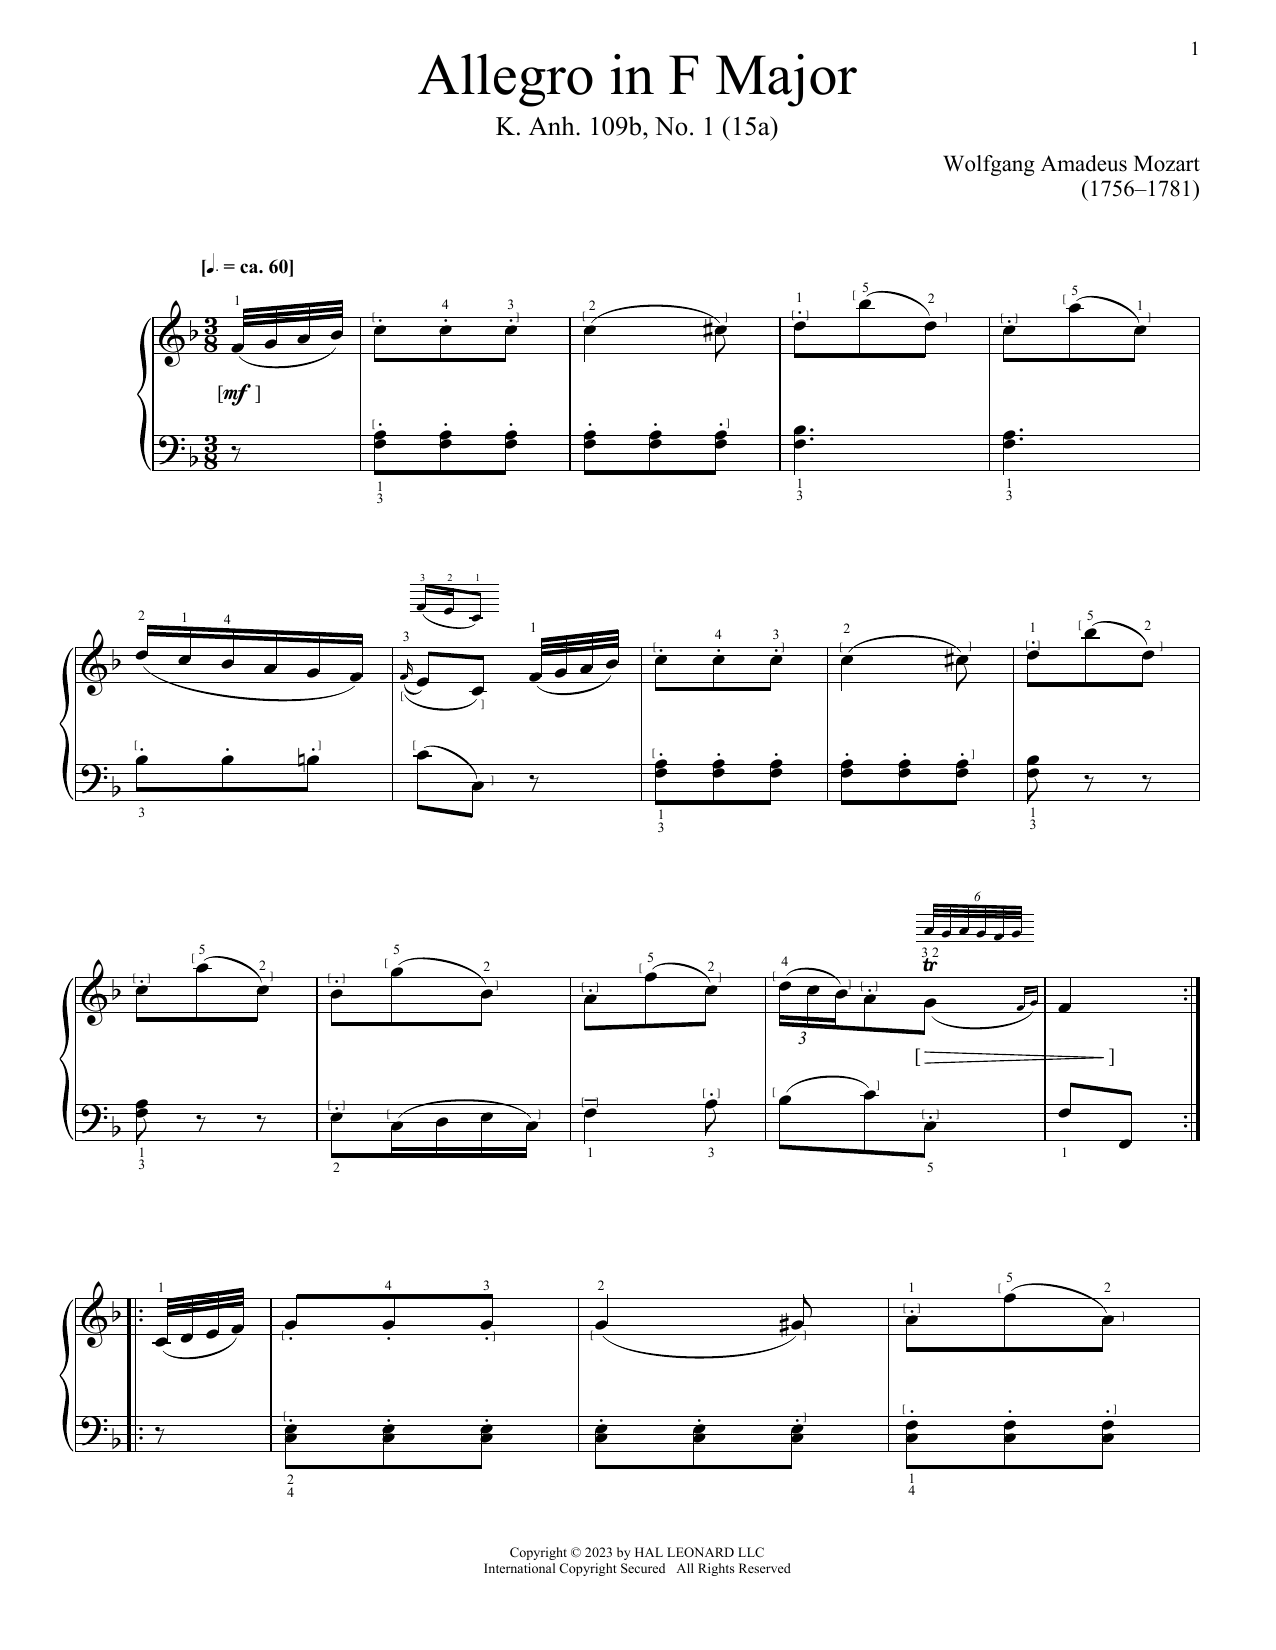 Download Wolfgang Amadeus Mozart Allegro in F Major, K. Anh. 109, No. 1 Sheet Music